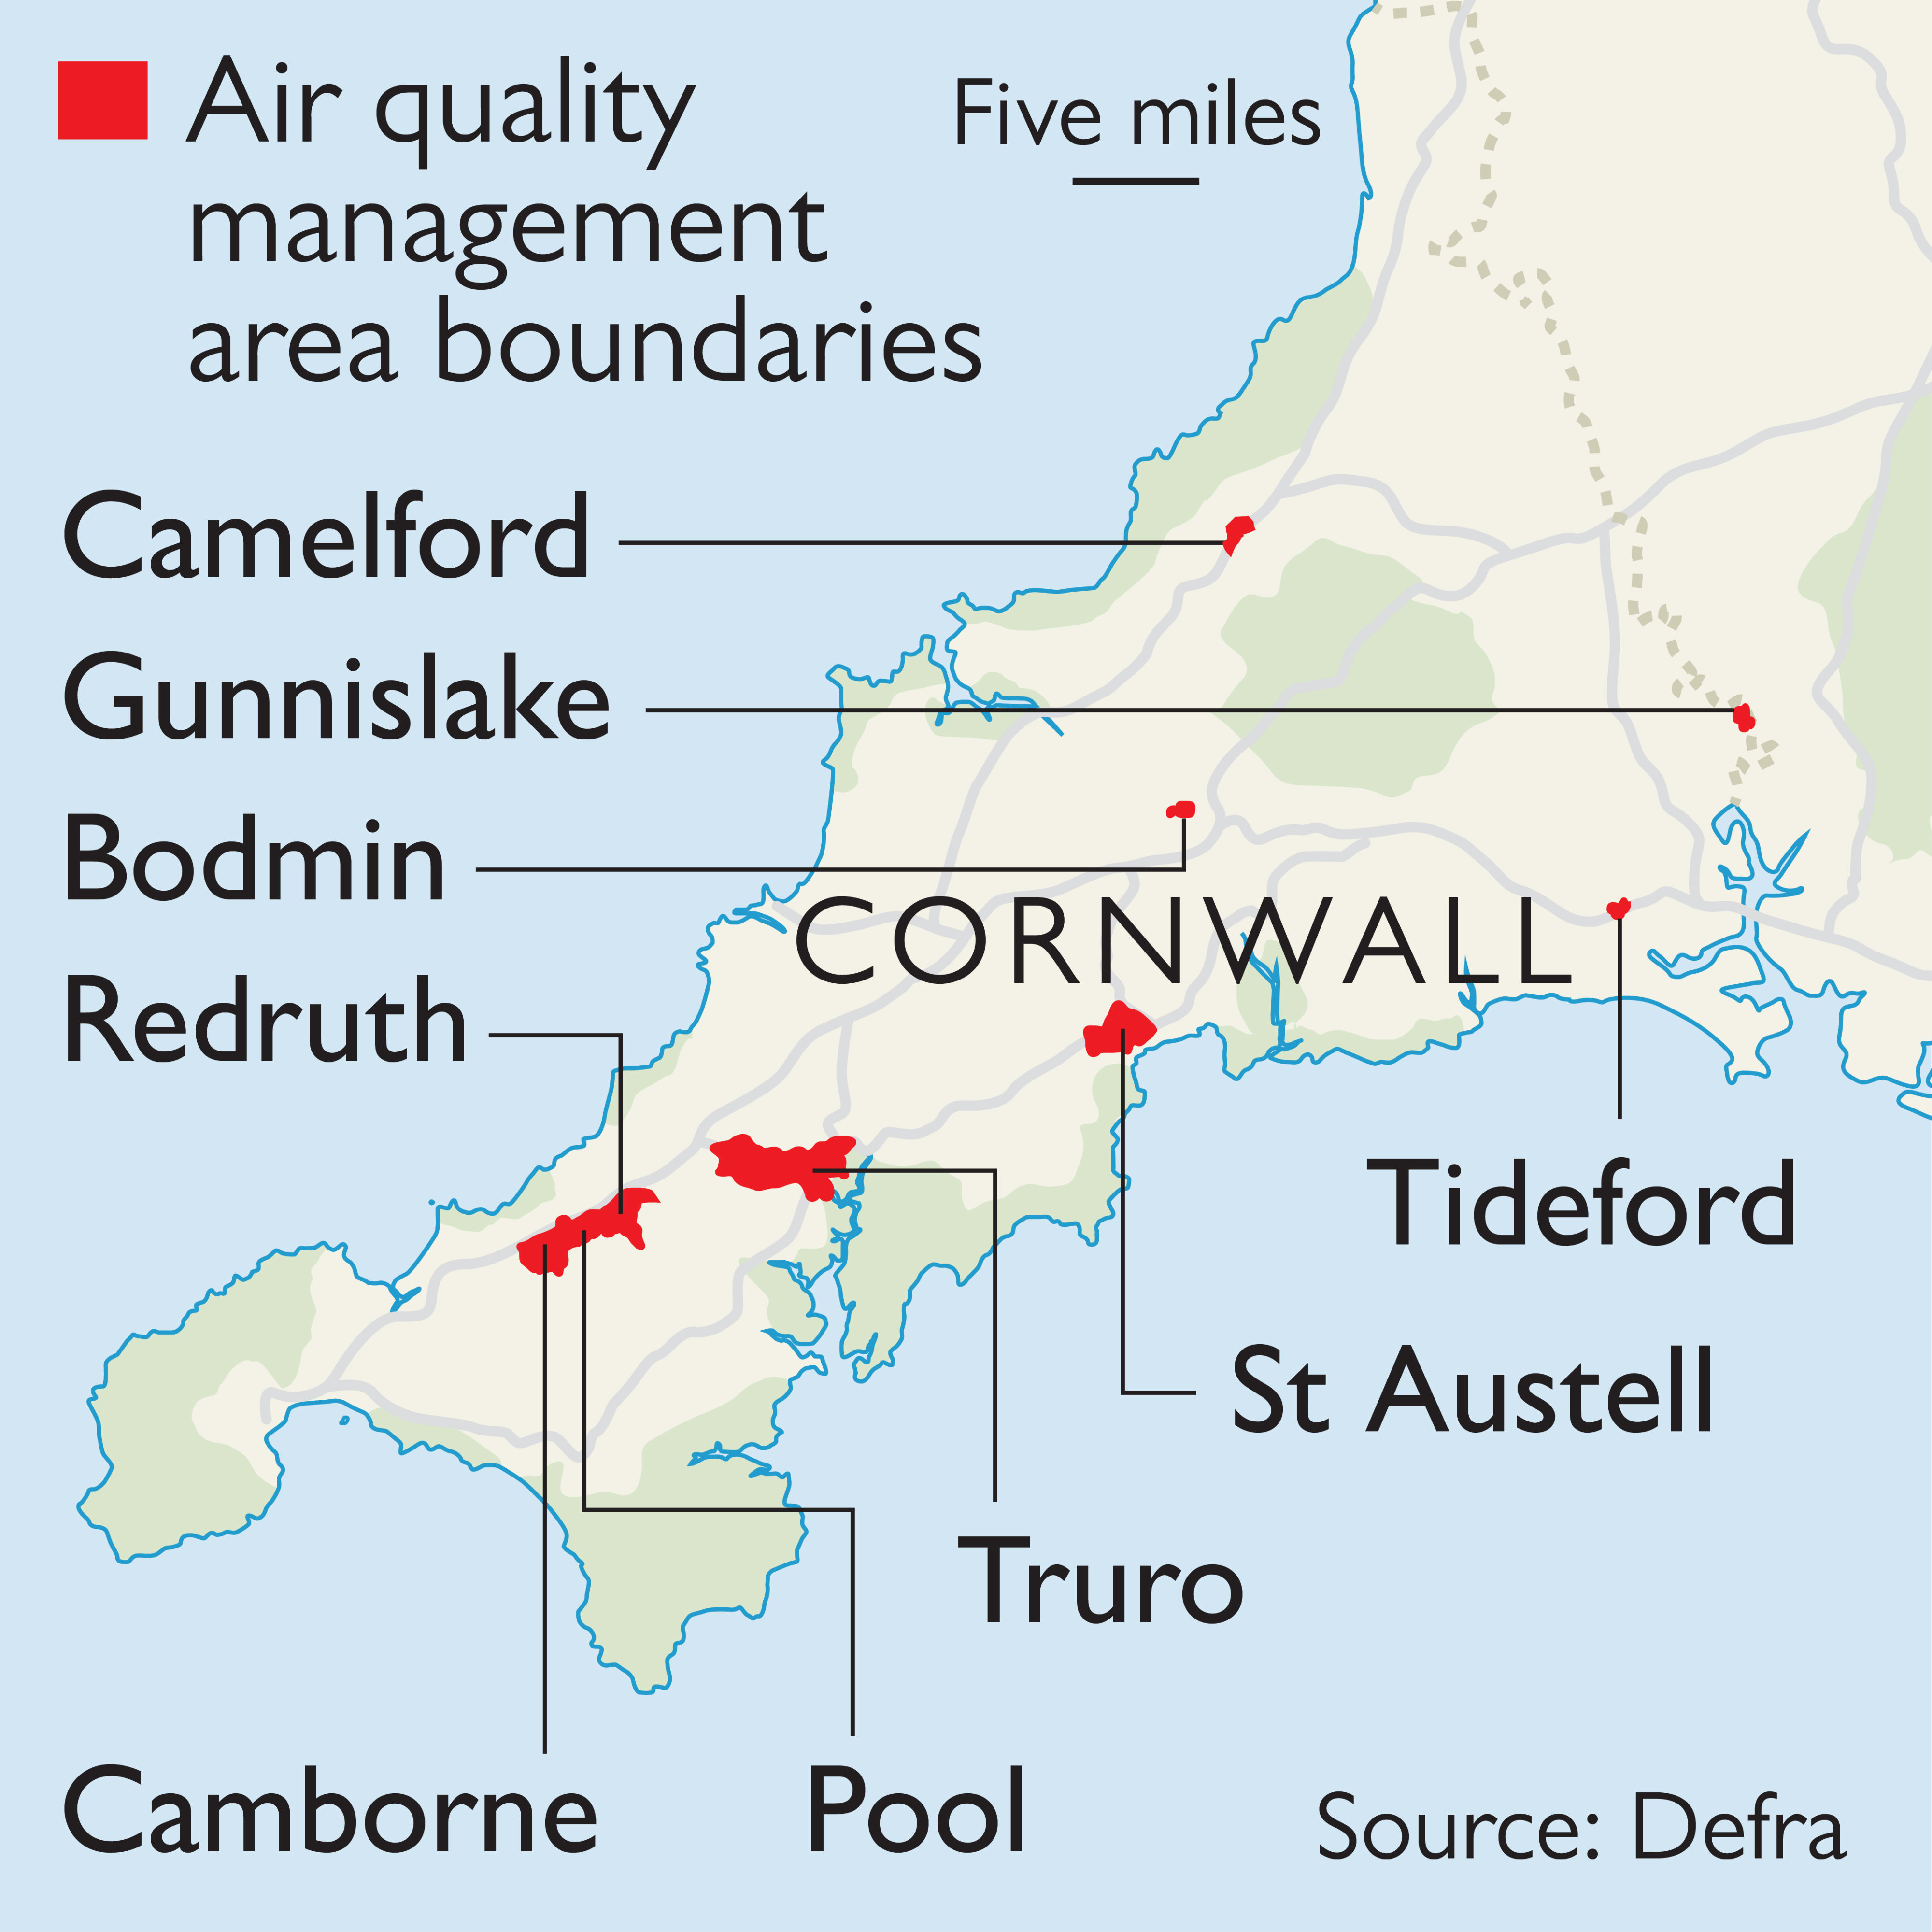 Cornwall air quality management boundaries